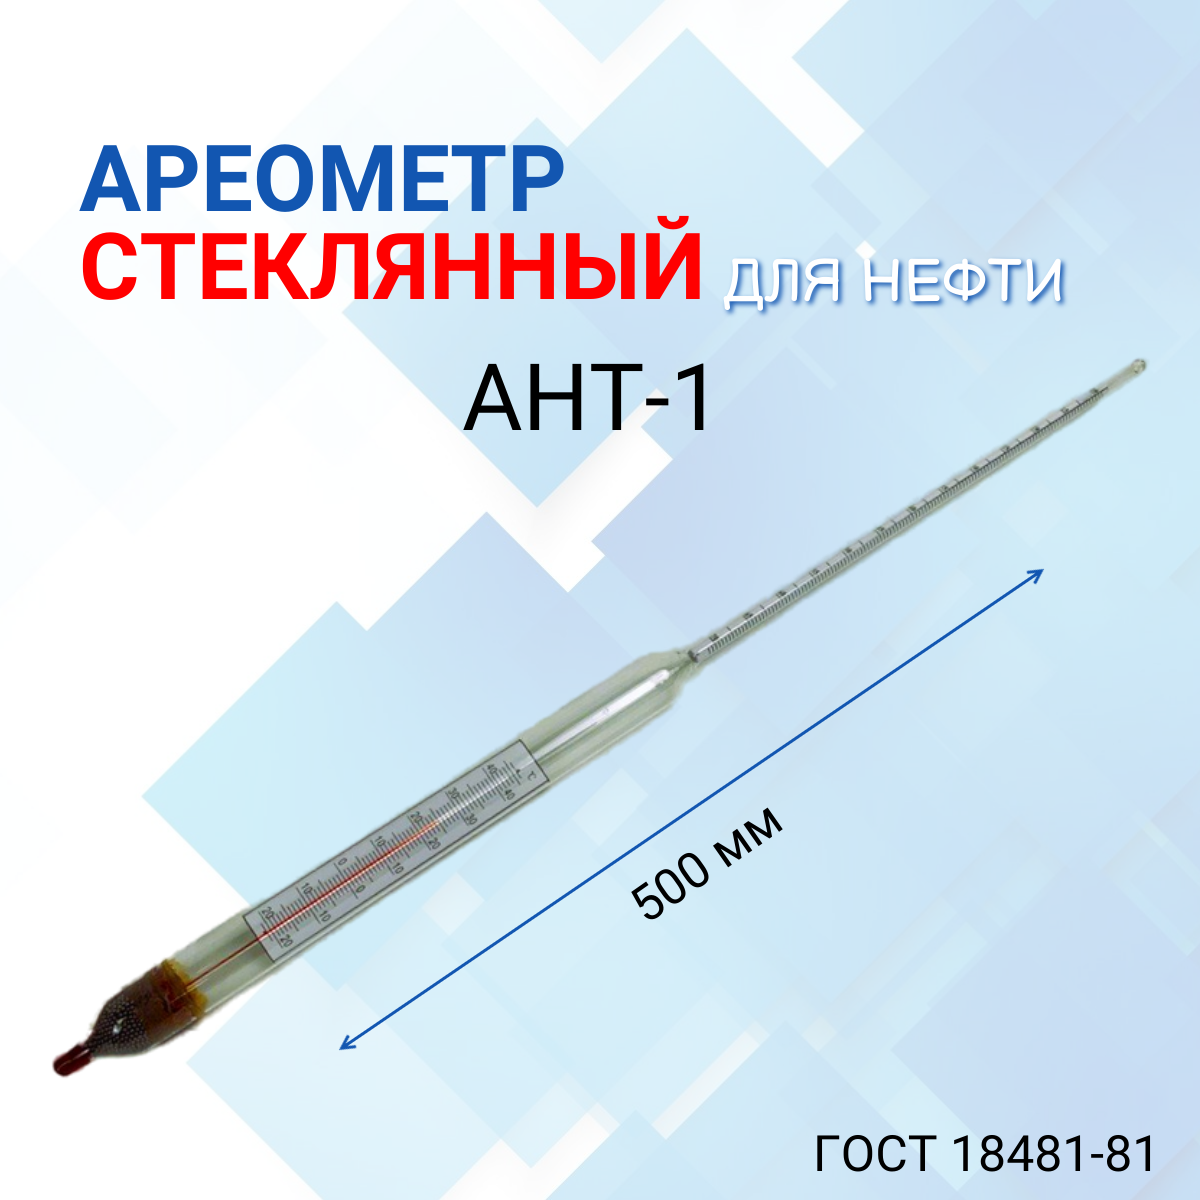 Ареометр "АНТ-1" 650-710 с поверкой РФ